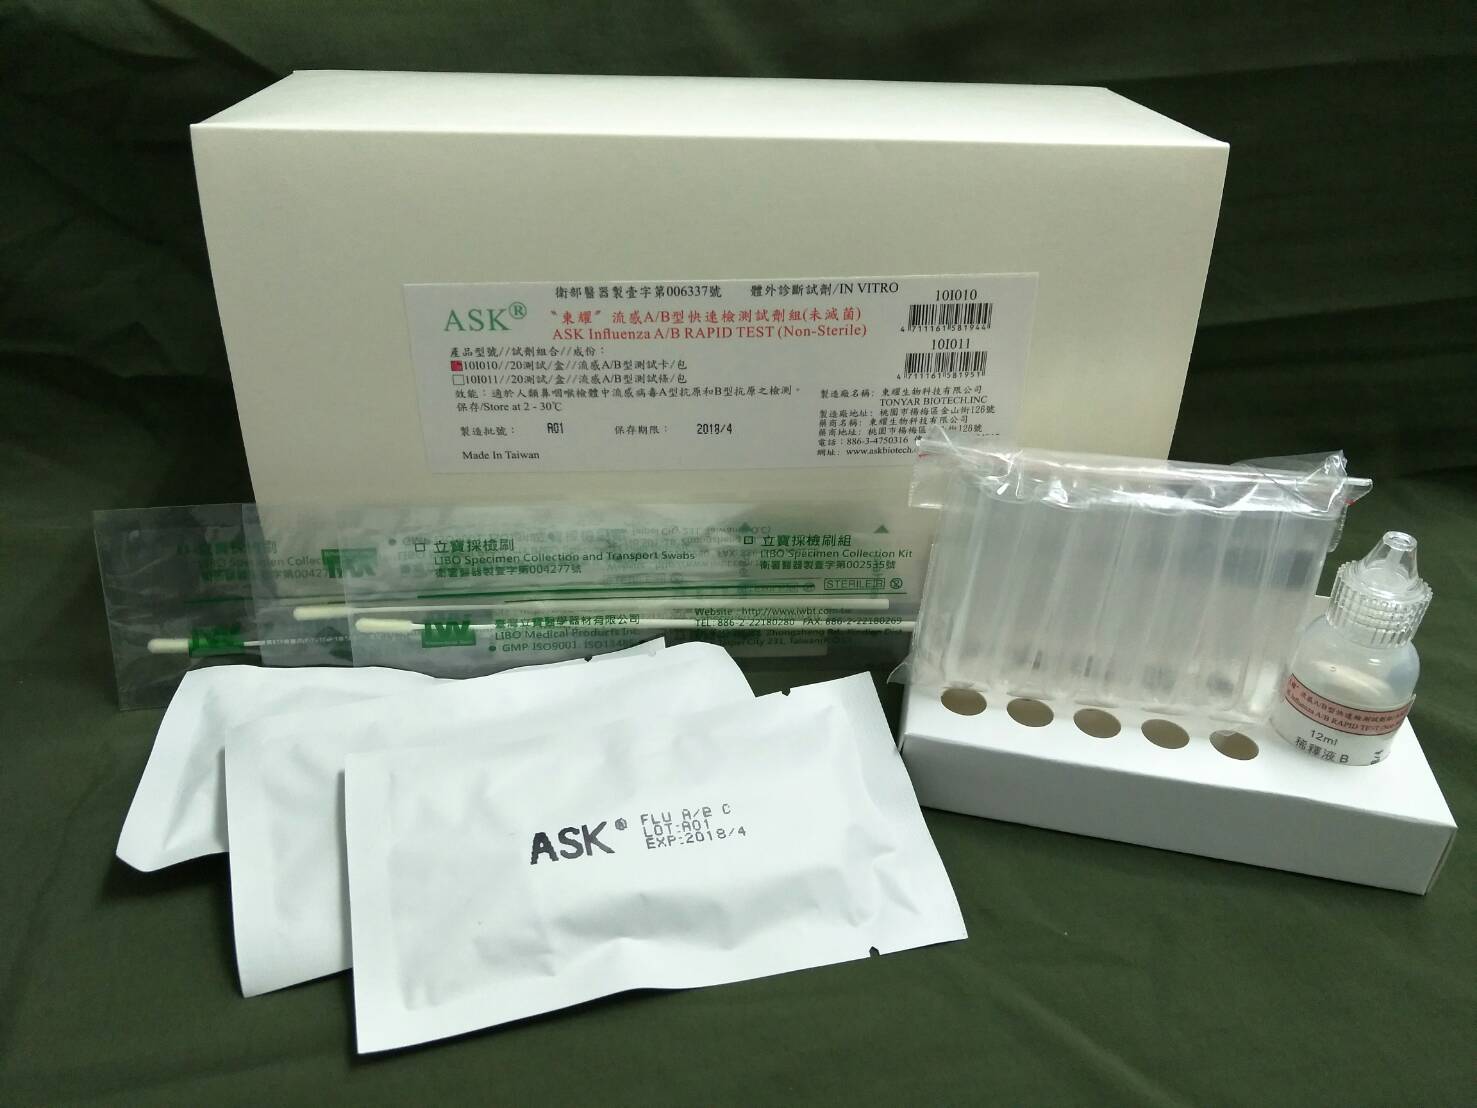 ASK Influenza A/B RAPID TEST (Non-Sterile)